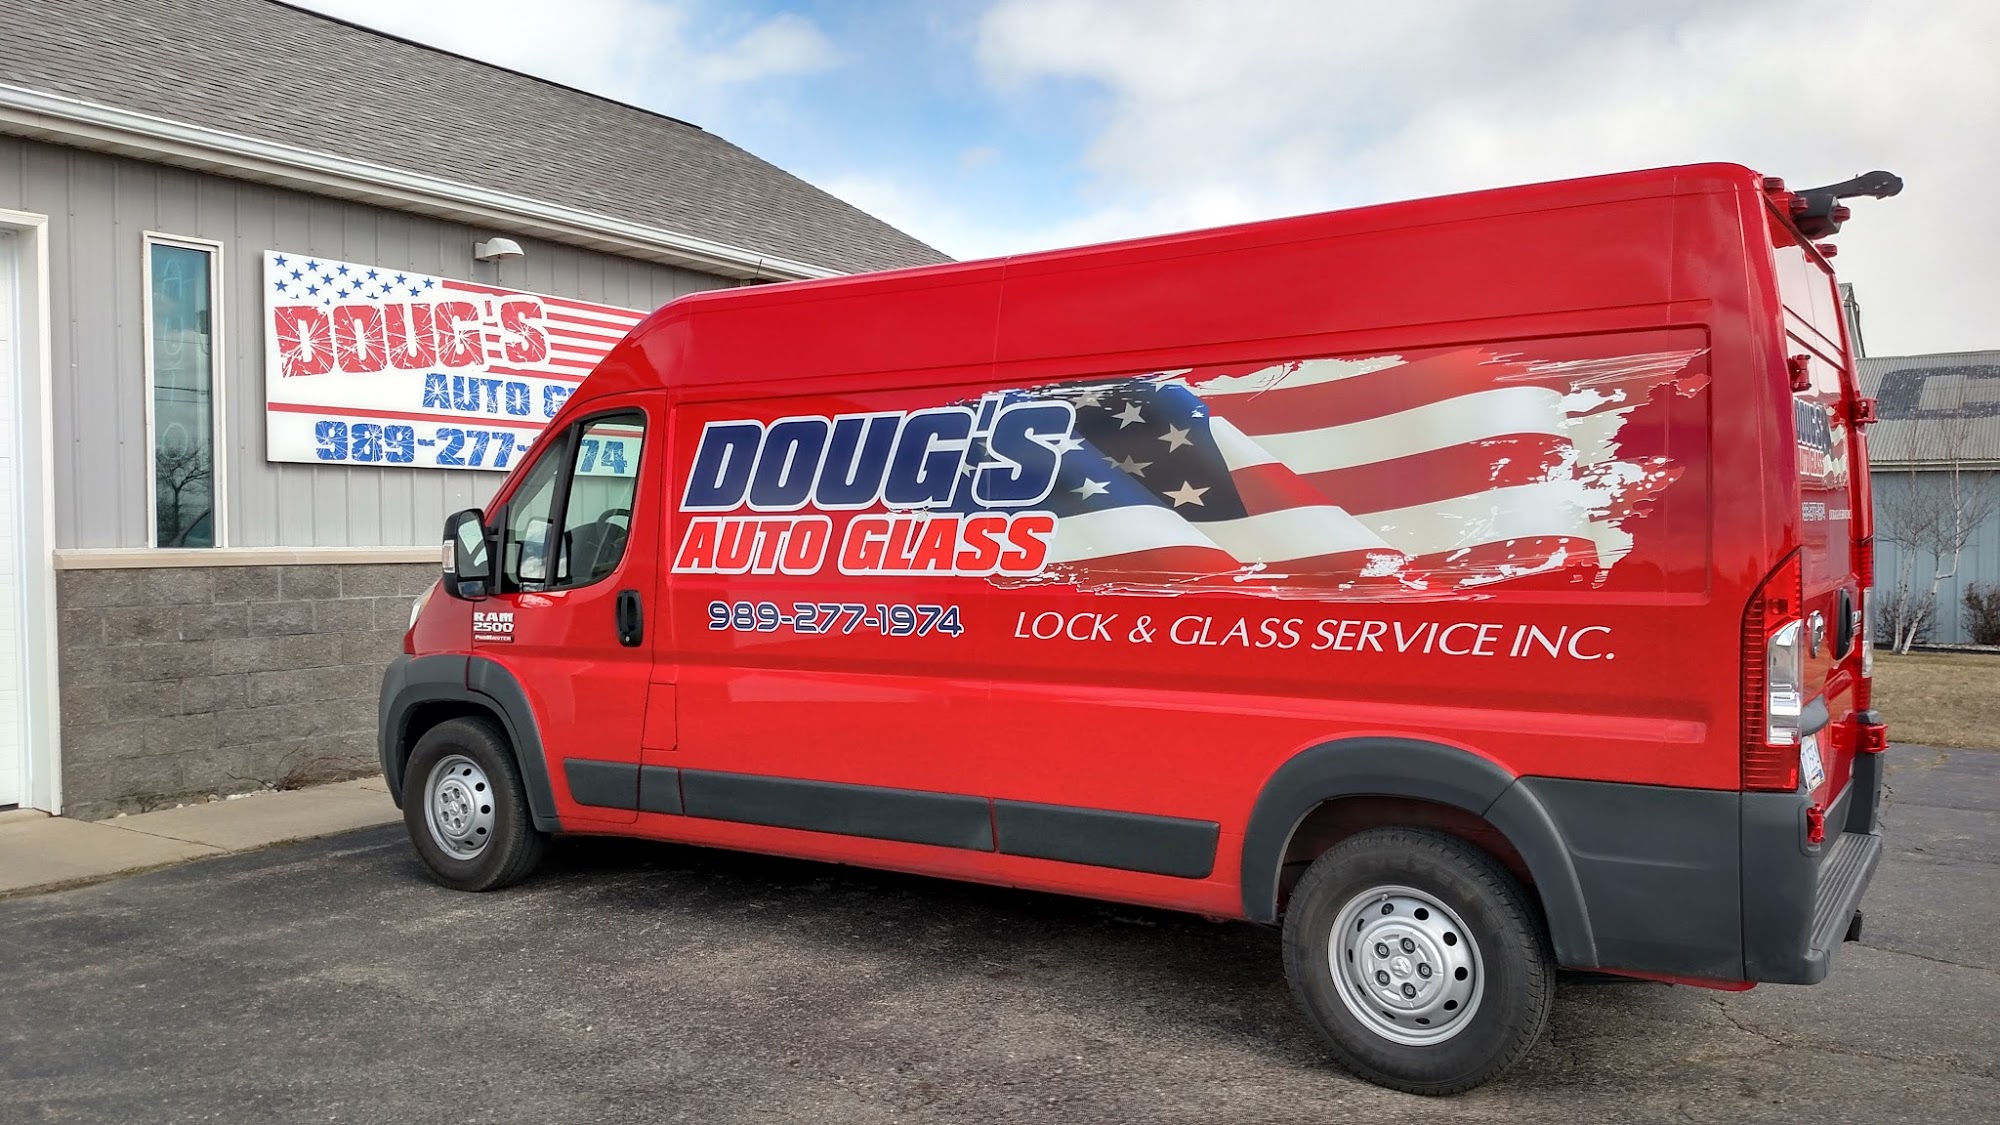 Doug's Lock & Glass Service Inc